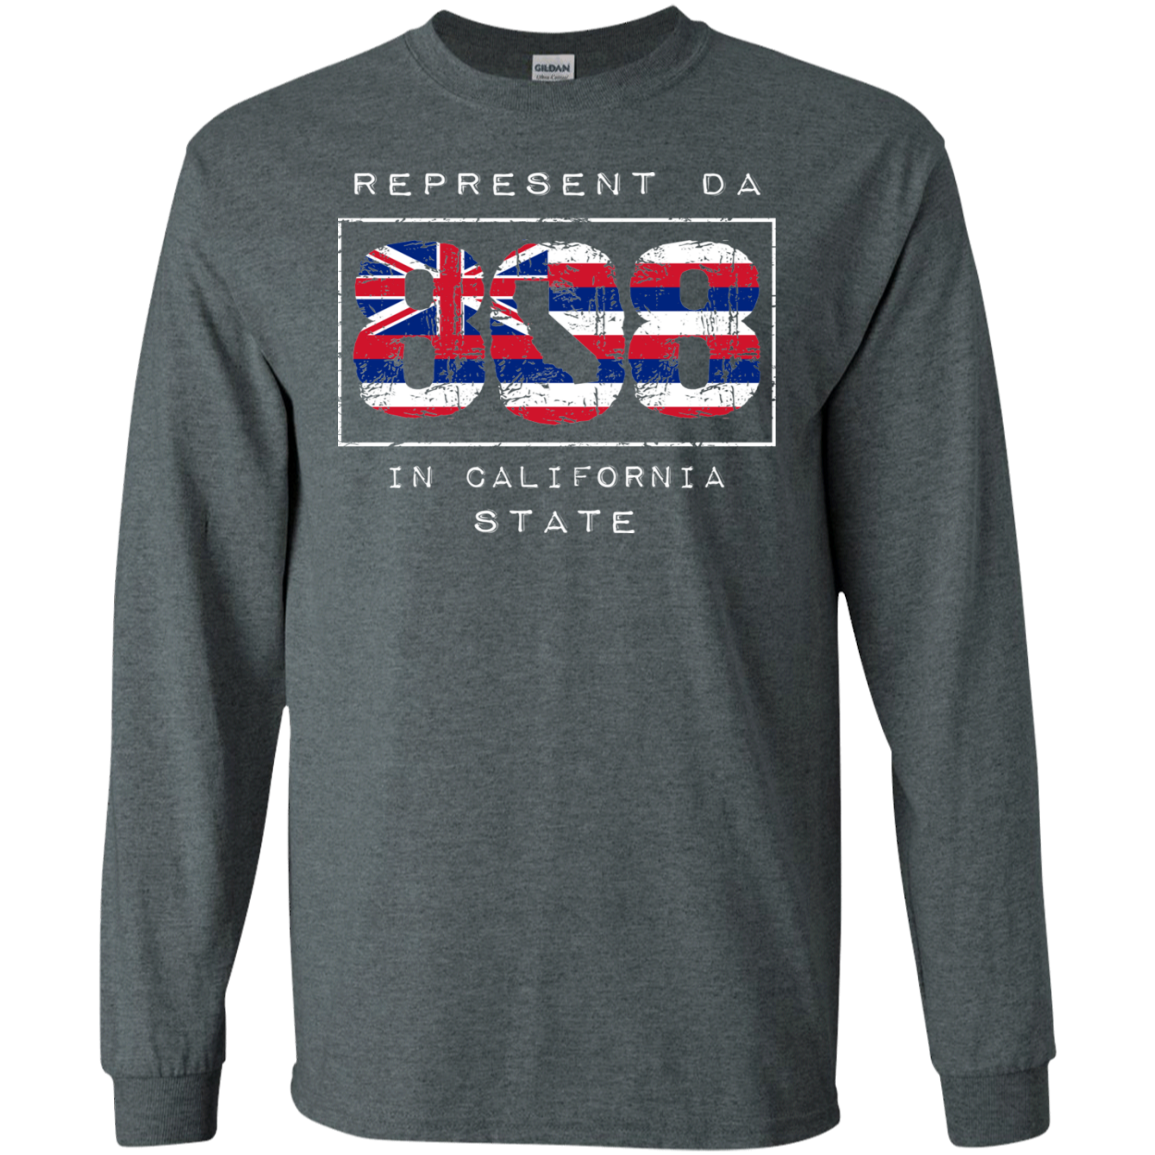 Rep Da 808 In California State LS Ultra Cotton T-Shirt, T-Shirts, Hawaii Nei All Day